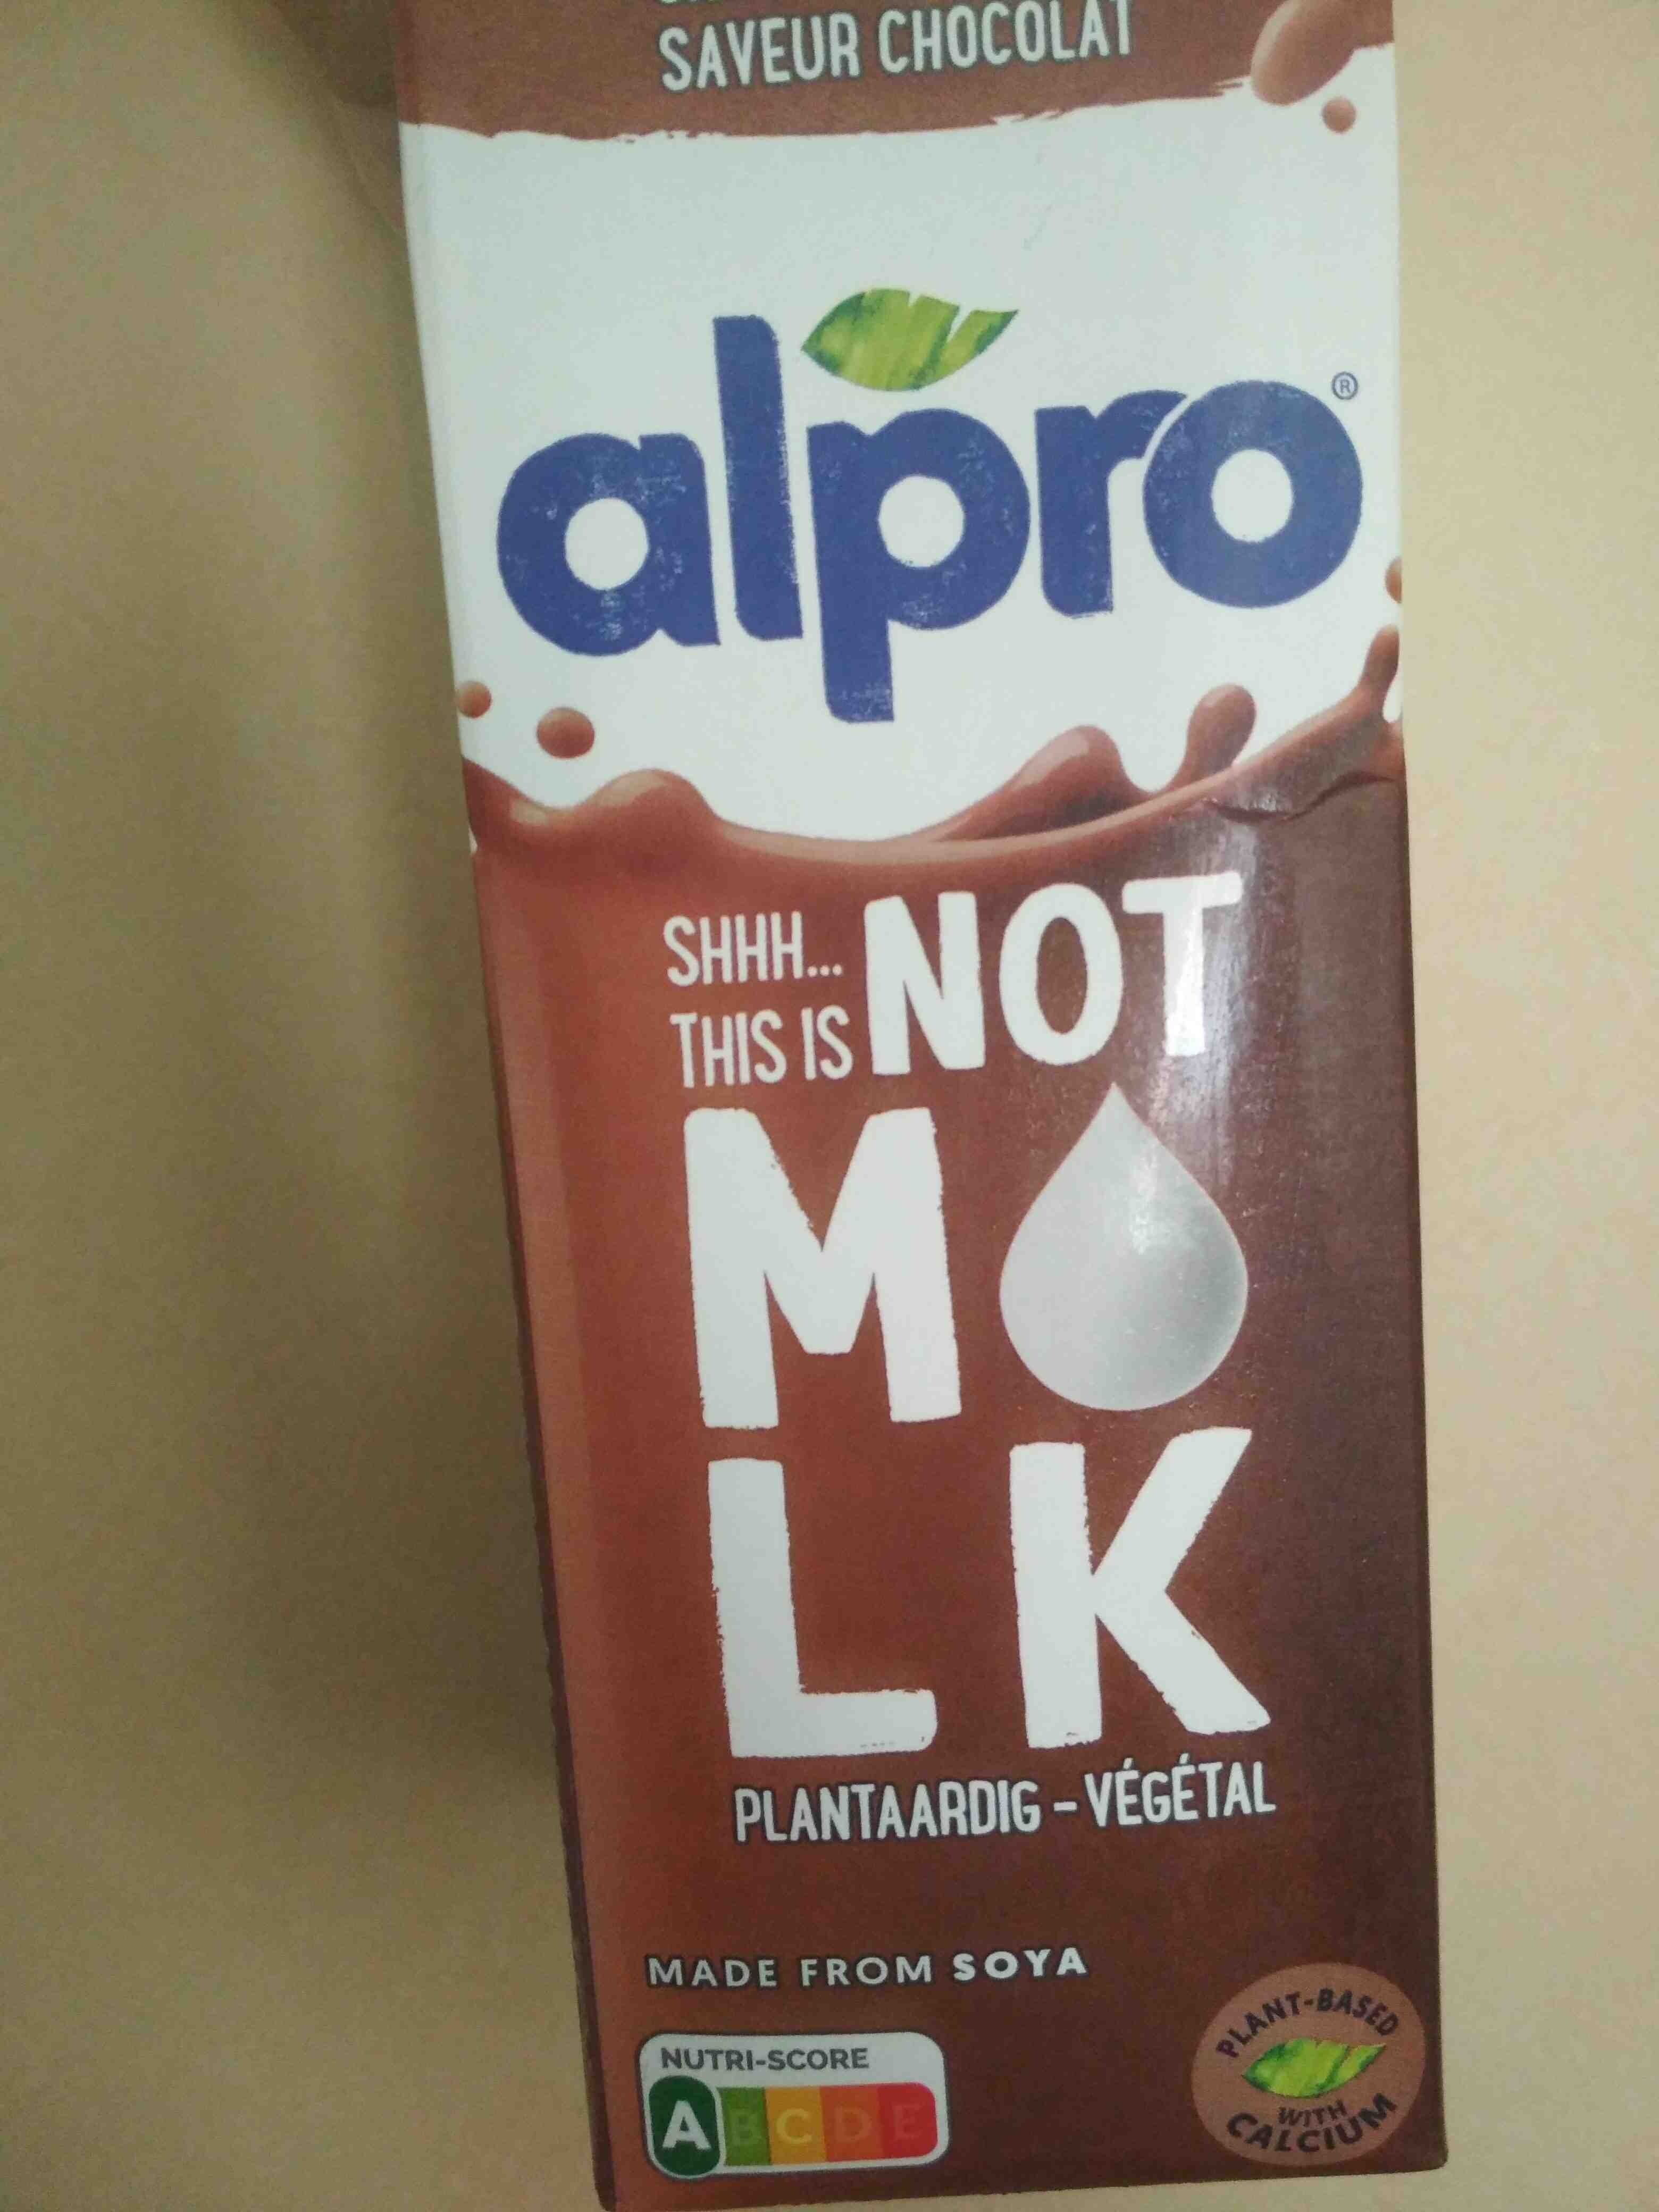 Not Milk - saveur chocolat - Product - en